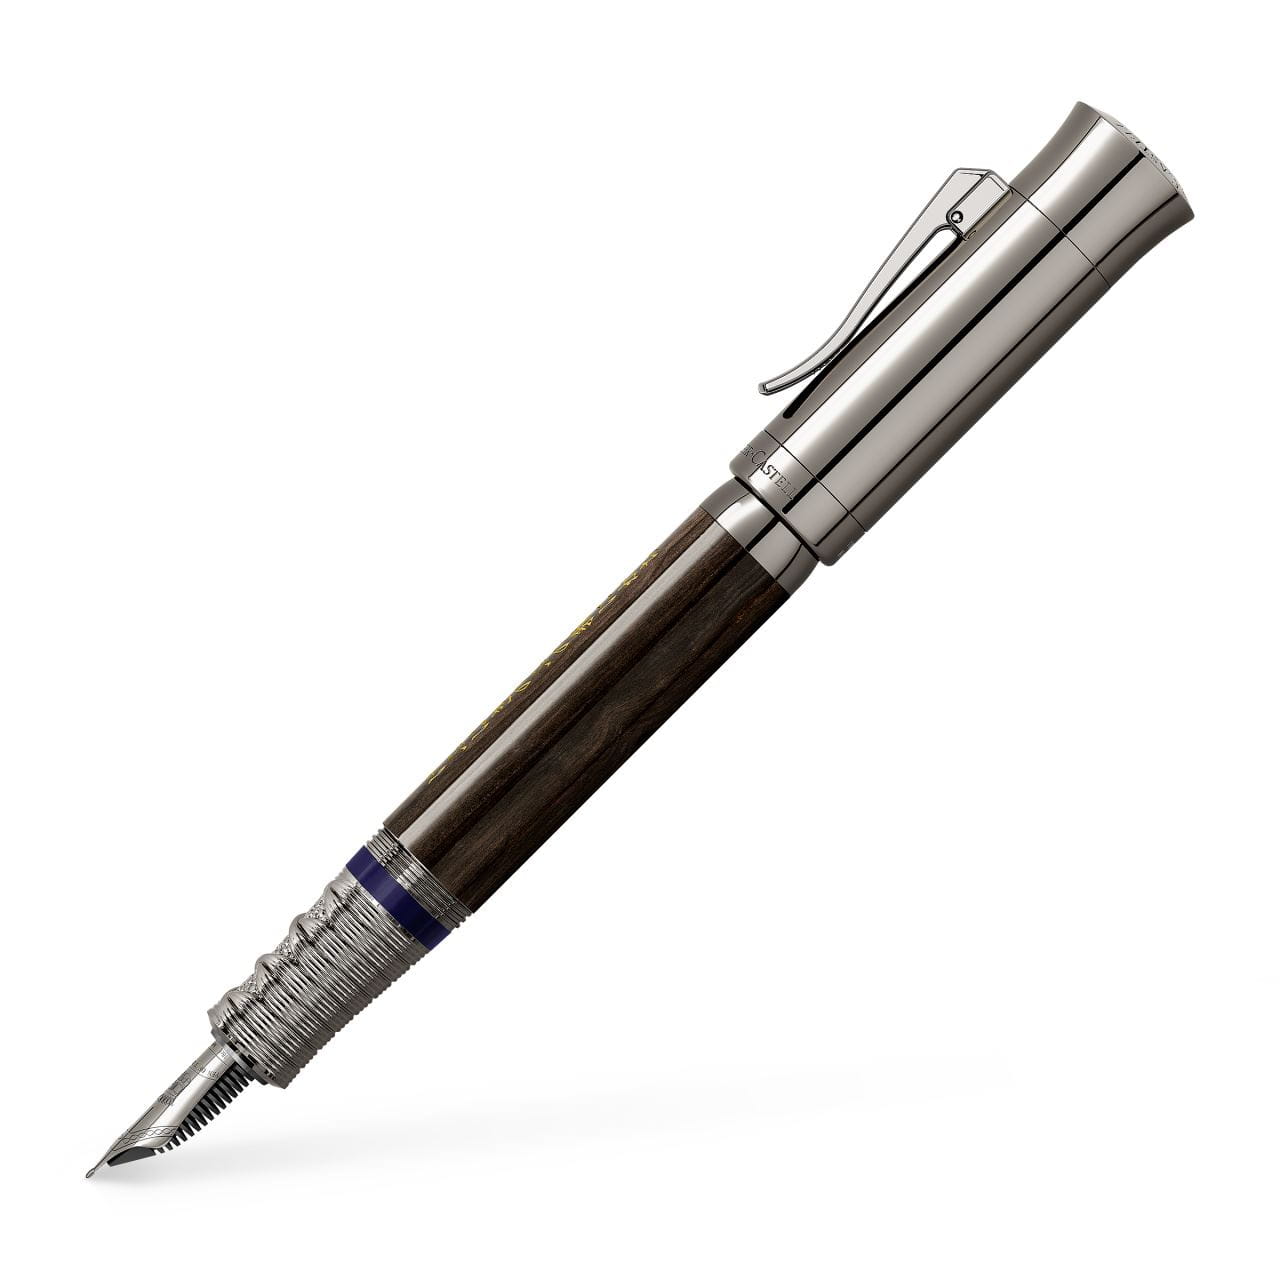 Graf-von-Faber-Castell - Fountain pen Pen of the Year 2019 Ruthenium, Medium